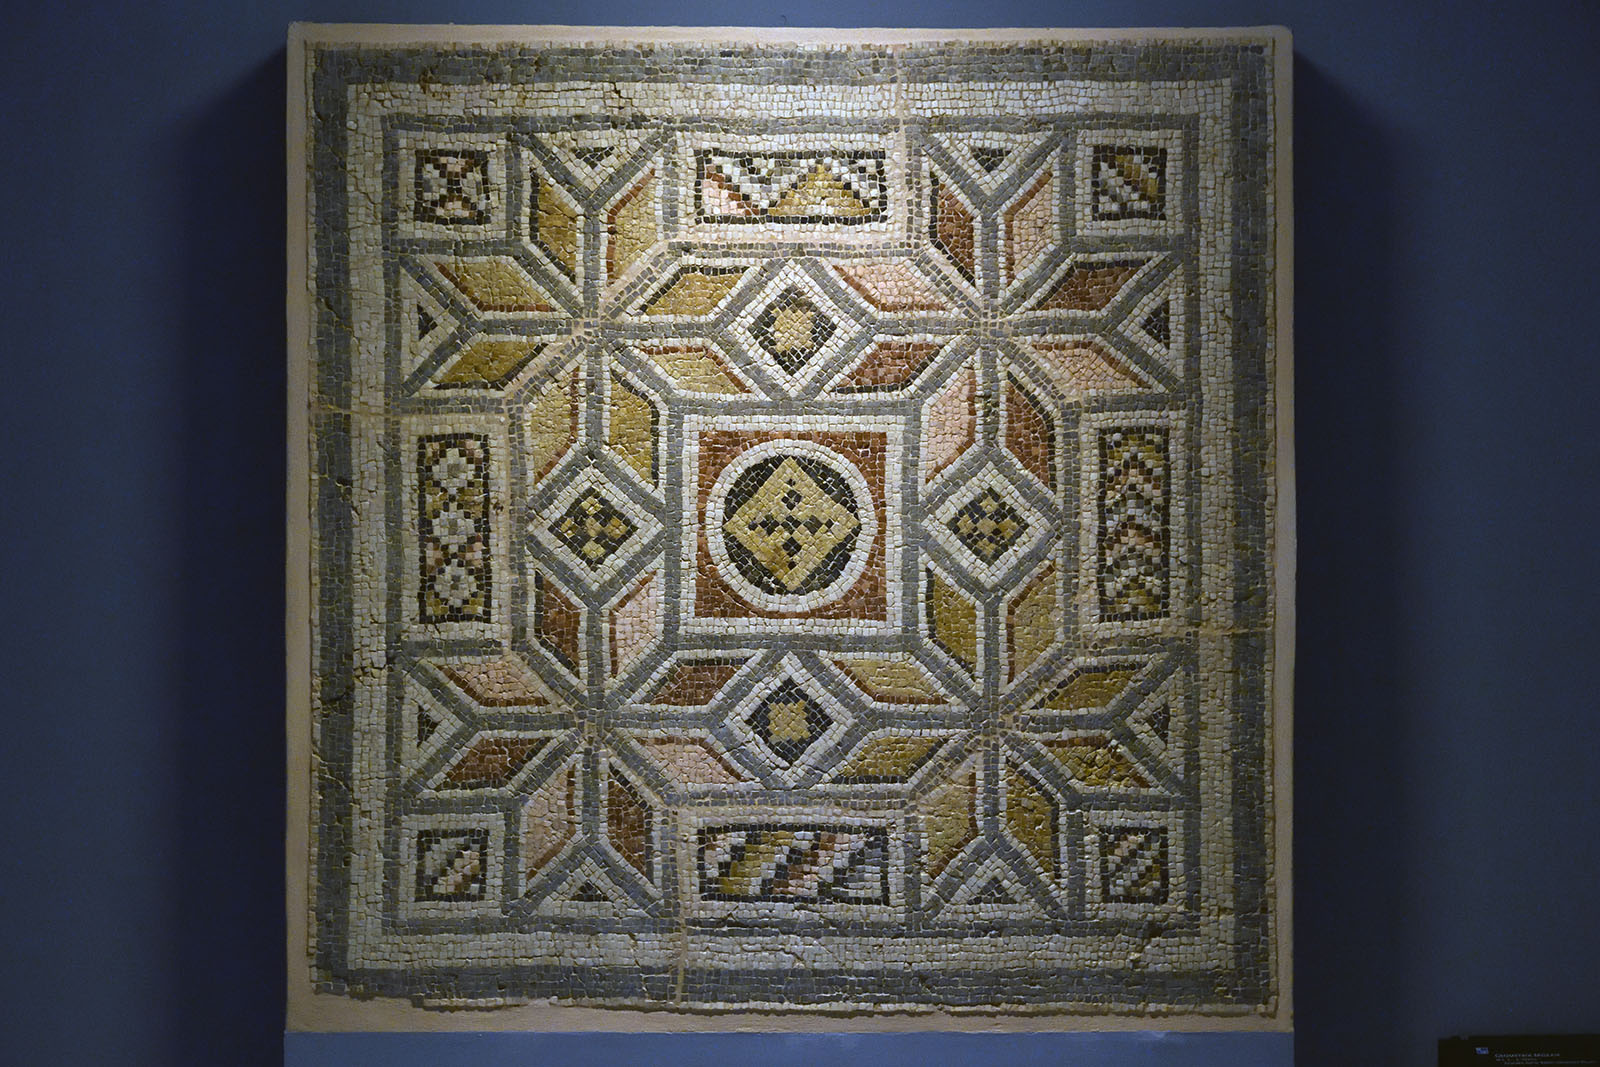 Gaziantep Zeugma museum Oceanus villa geometric mosaic sept 2019 4121.jpg